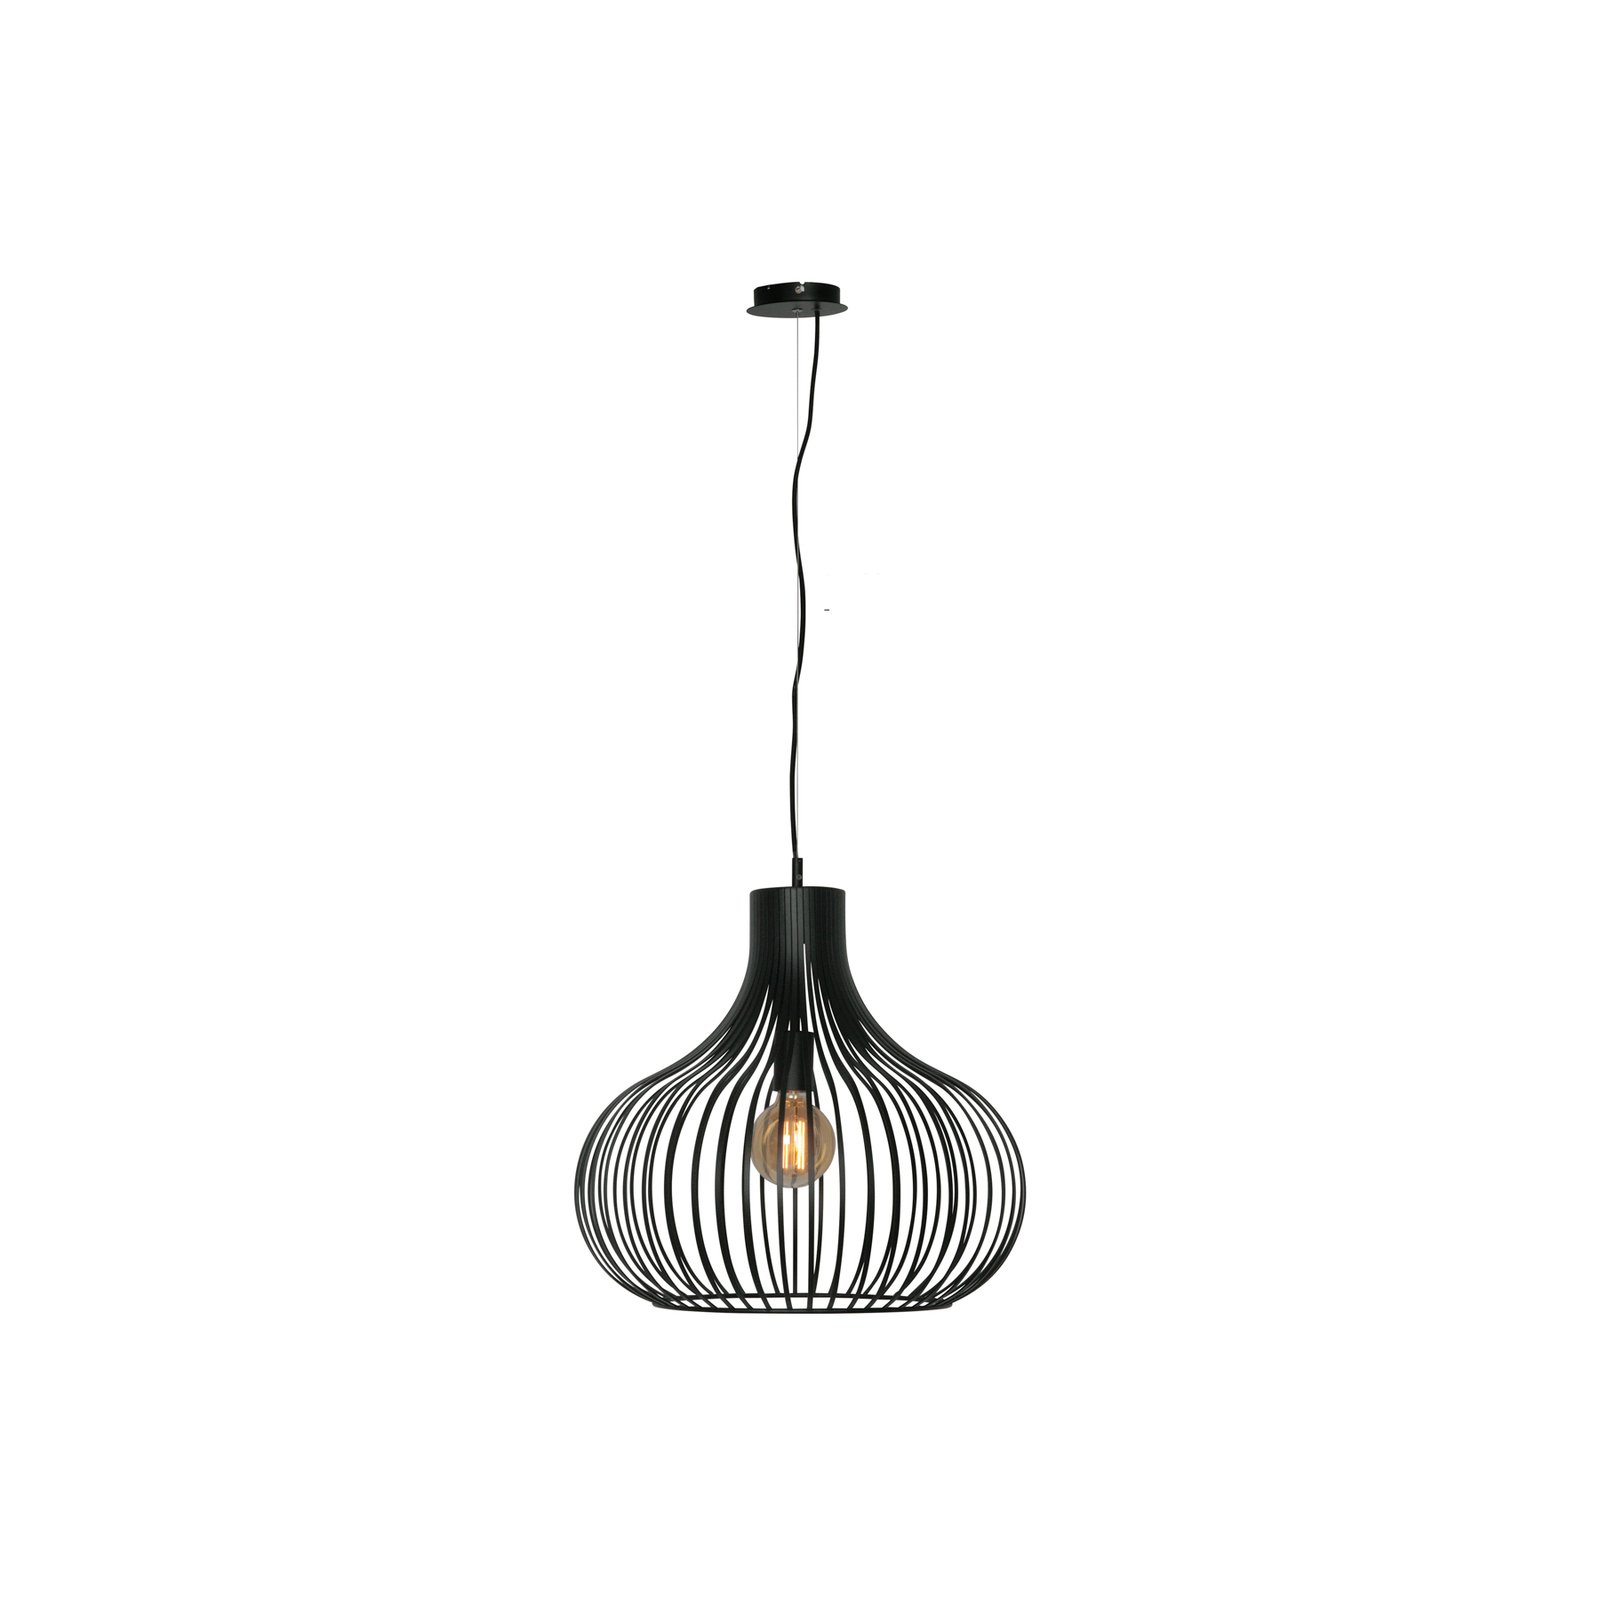 Viseća lampa Aglio, Ø 48 cm, crna, metal